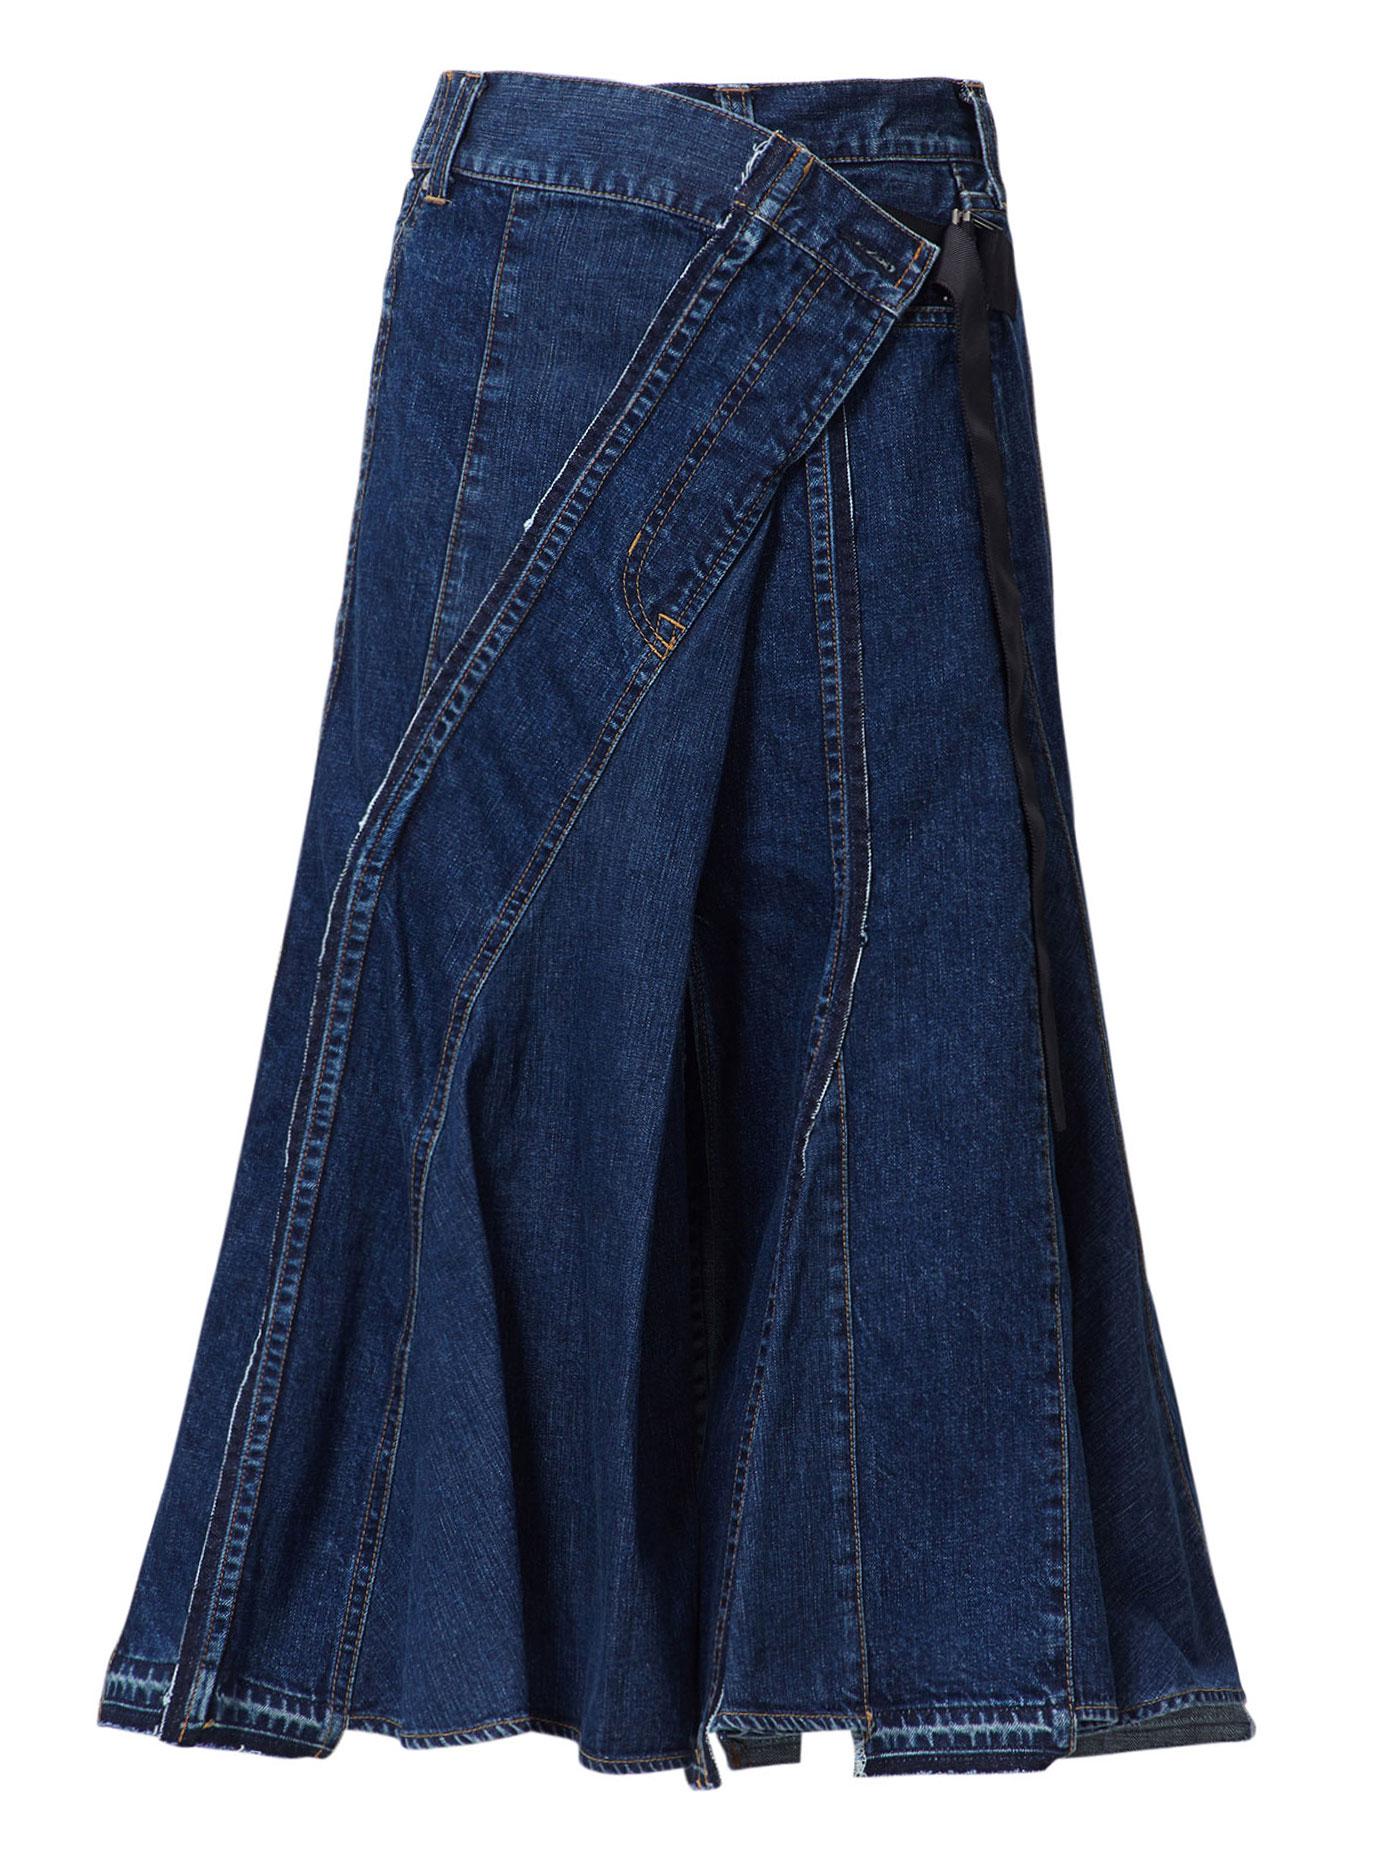 Sacai Asymmetrical Denim Skirt in Blue - Lyst